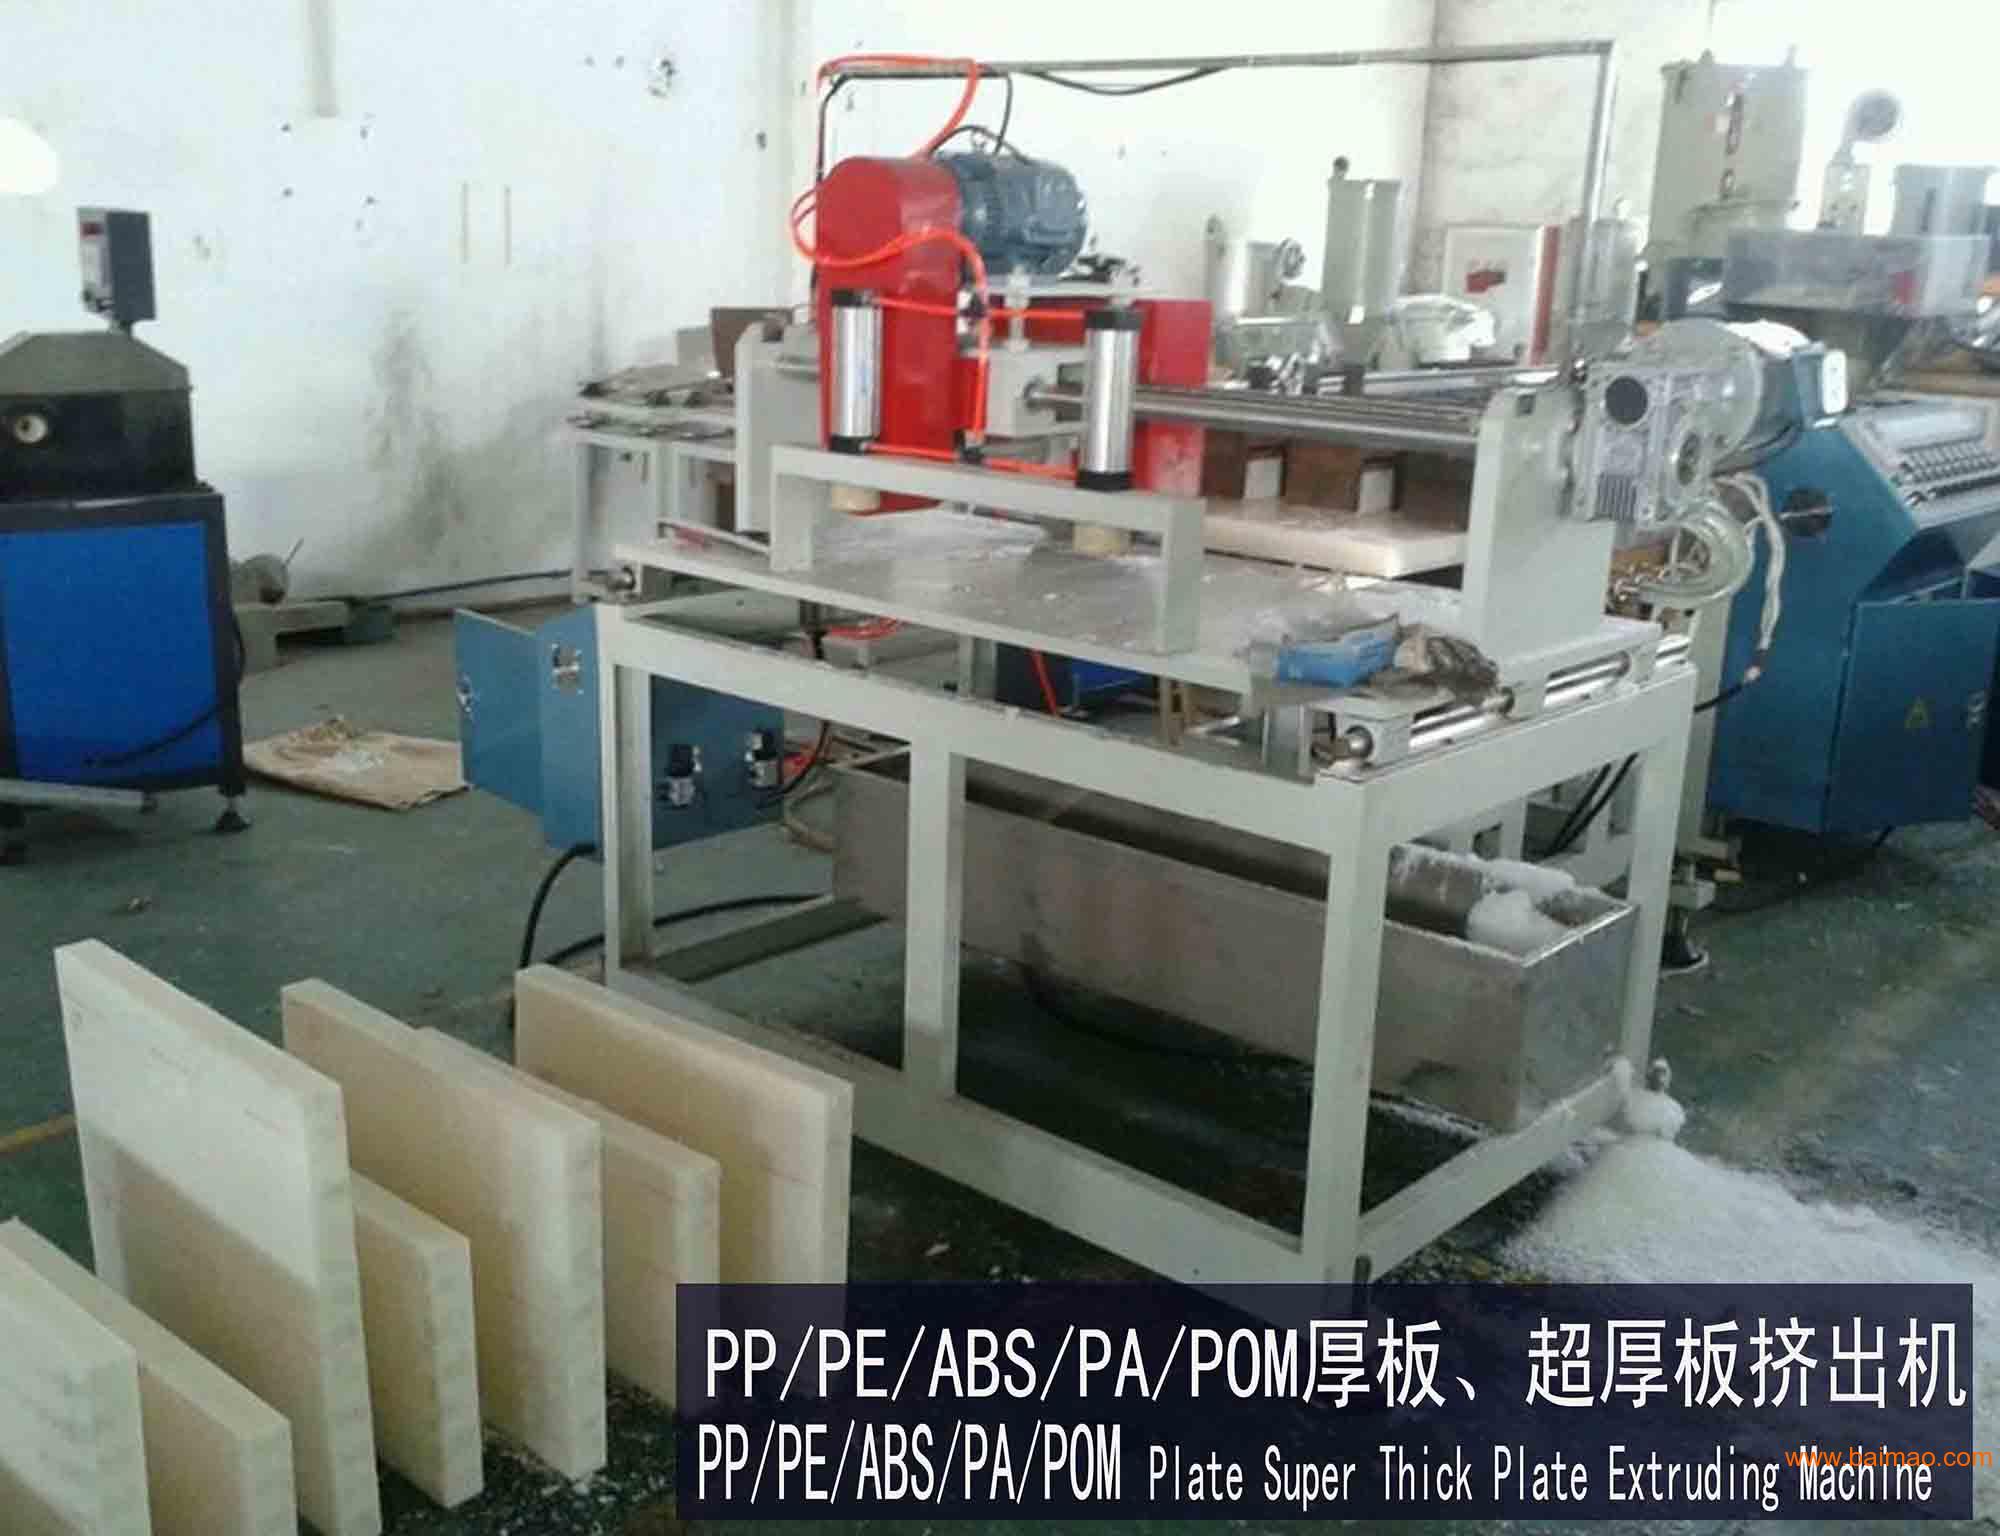 pp厚板挤出机 塑料板材加工机器 pp板材加工设备厂家/批发/供应商